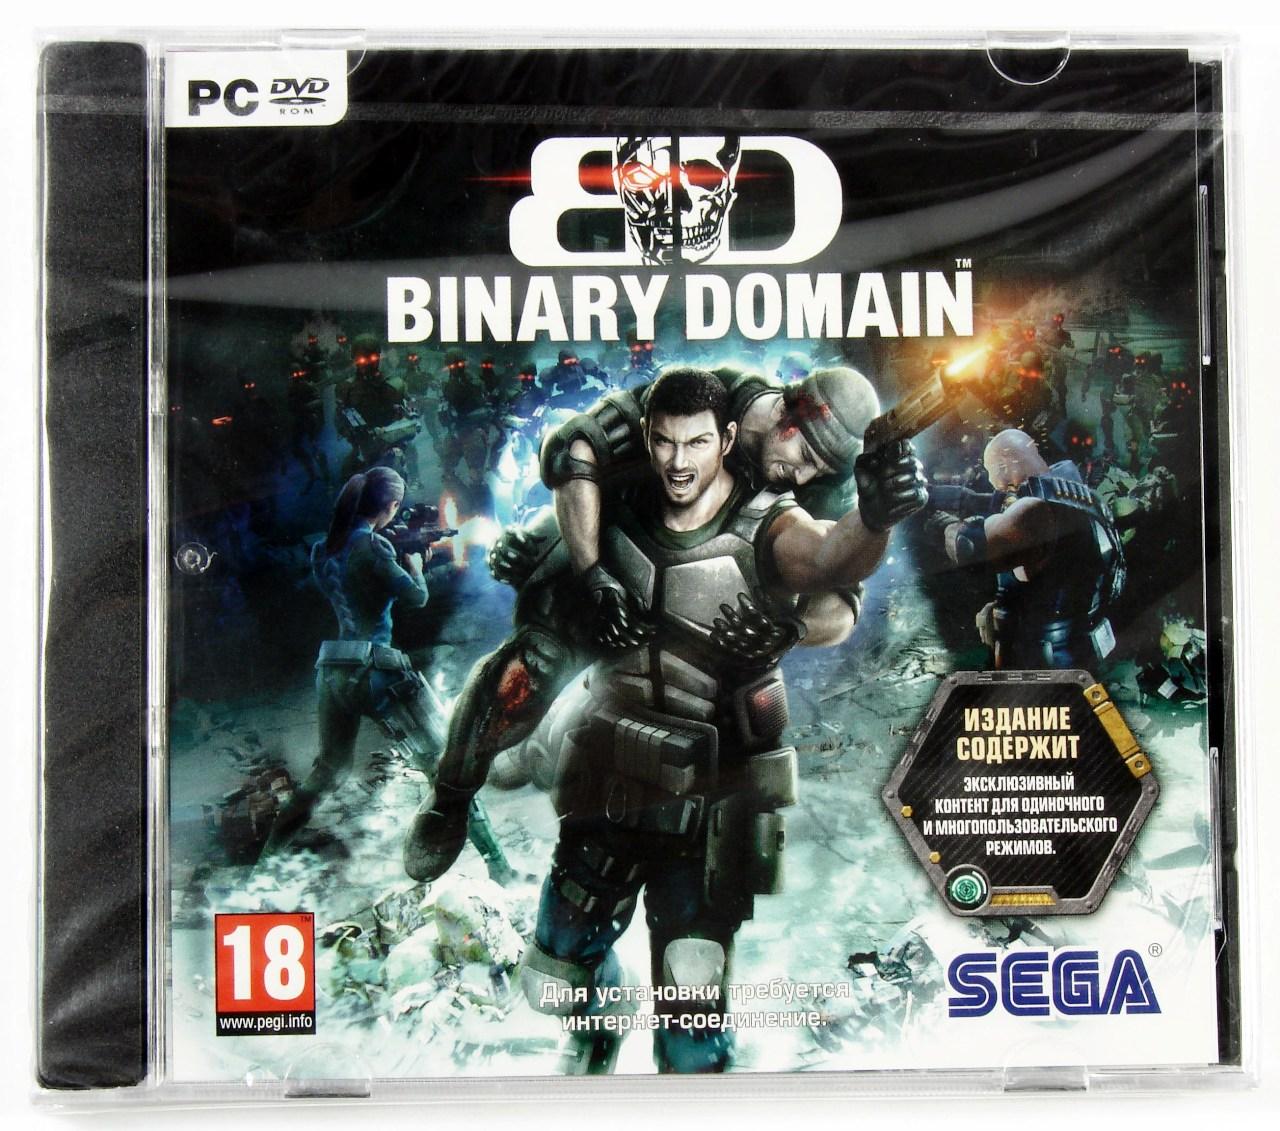  - Binary Domain (PC), "1-", DVD